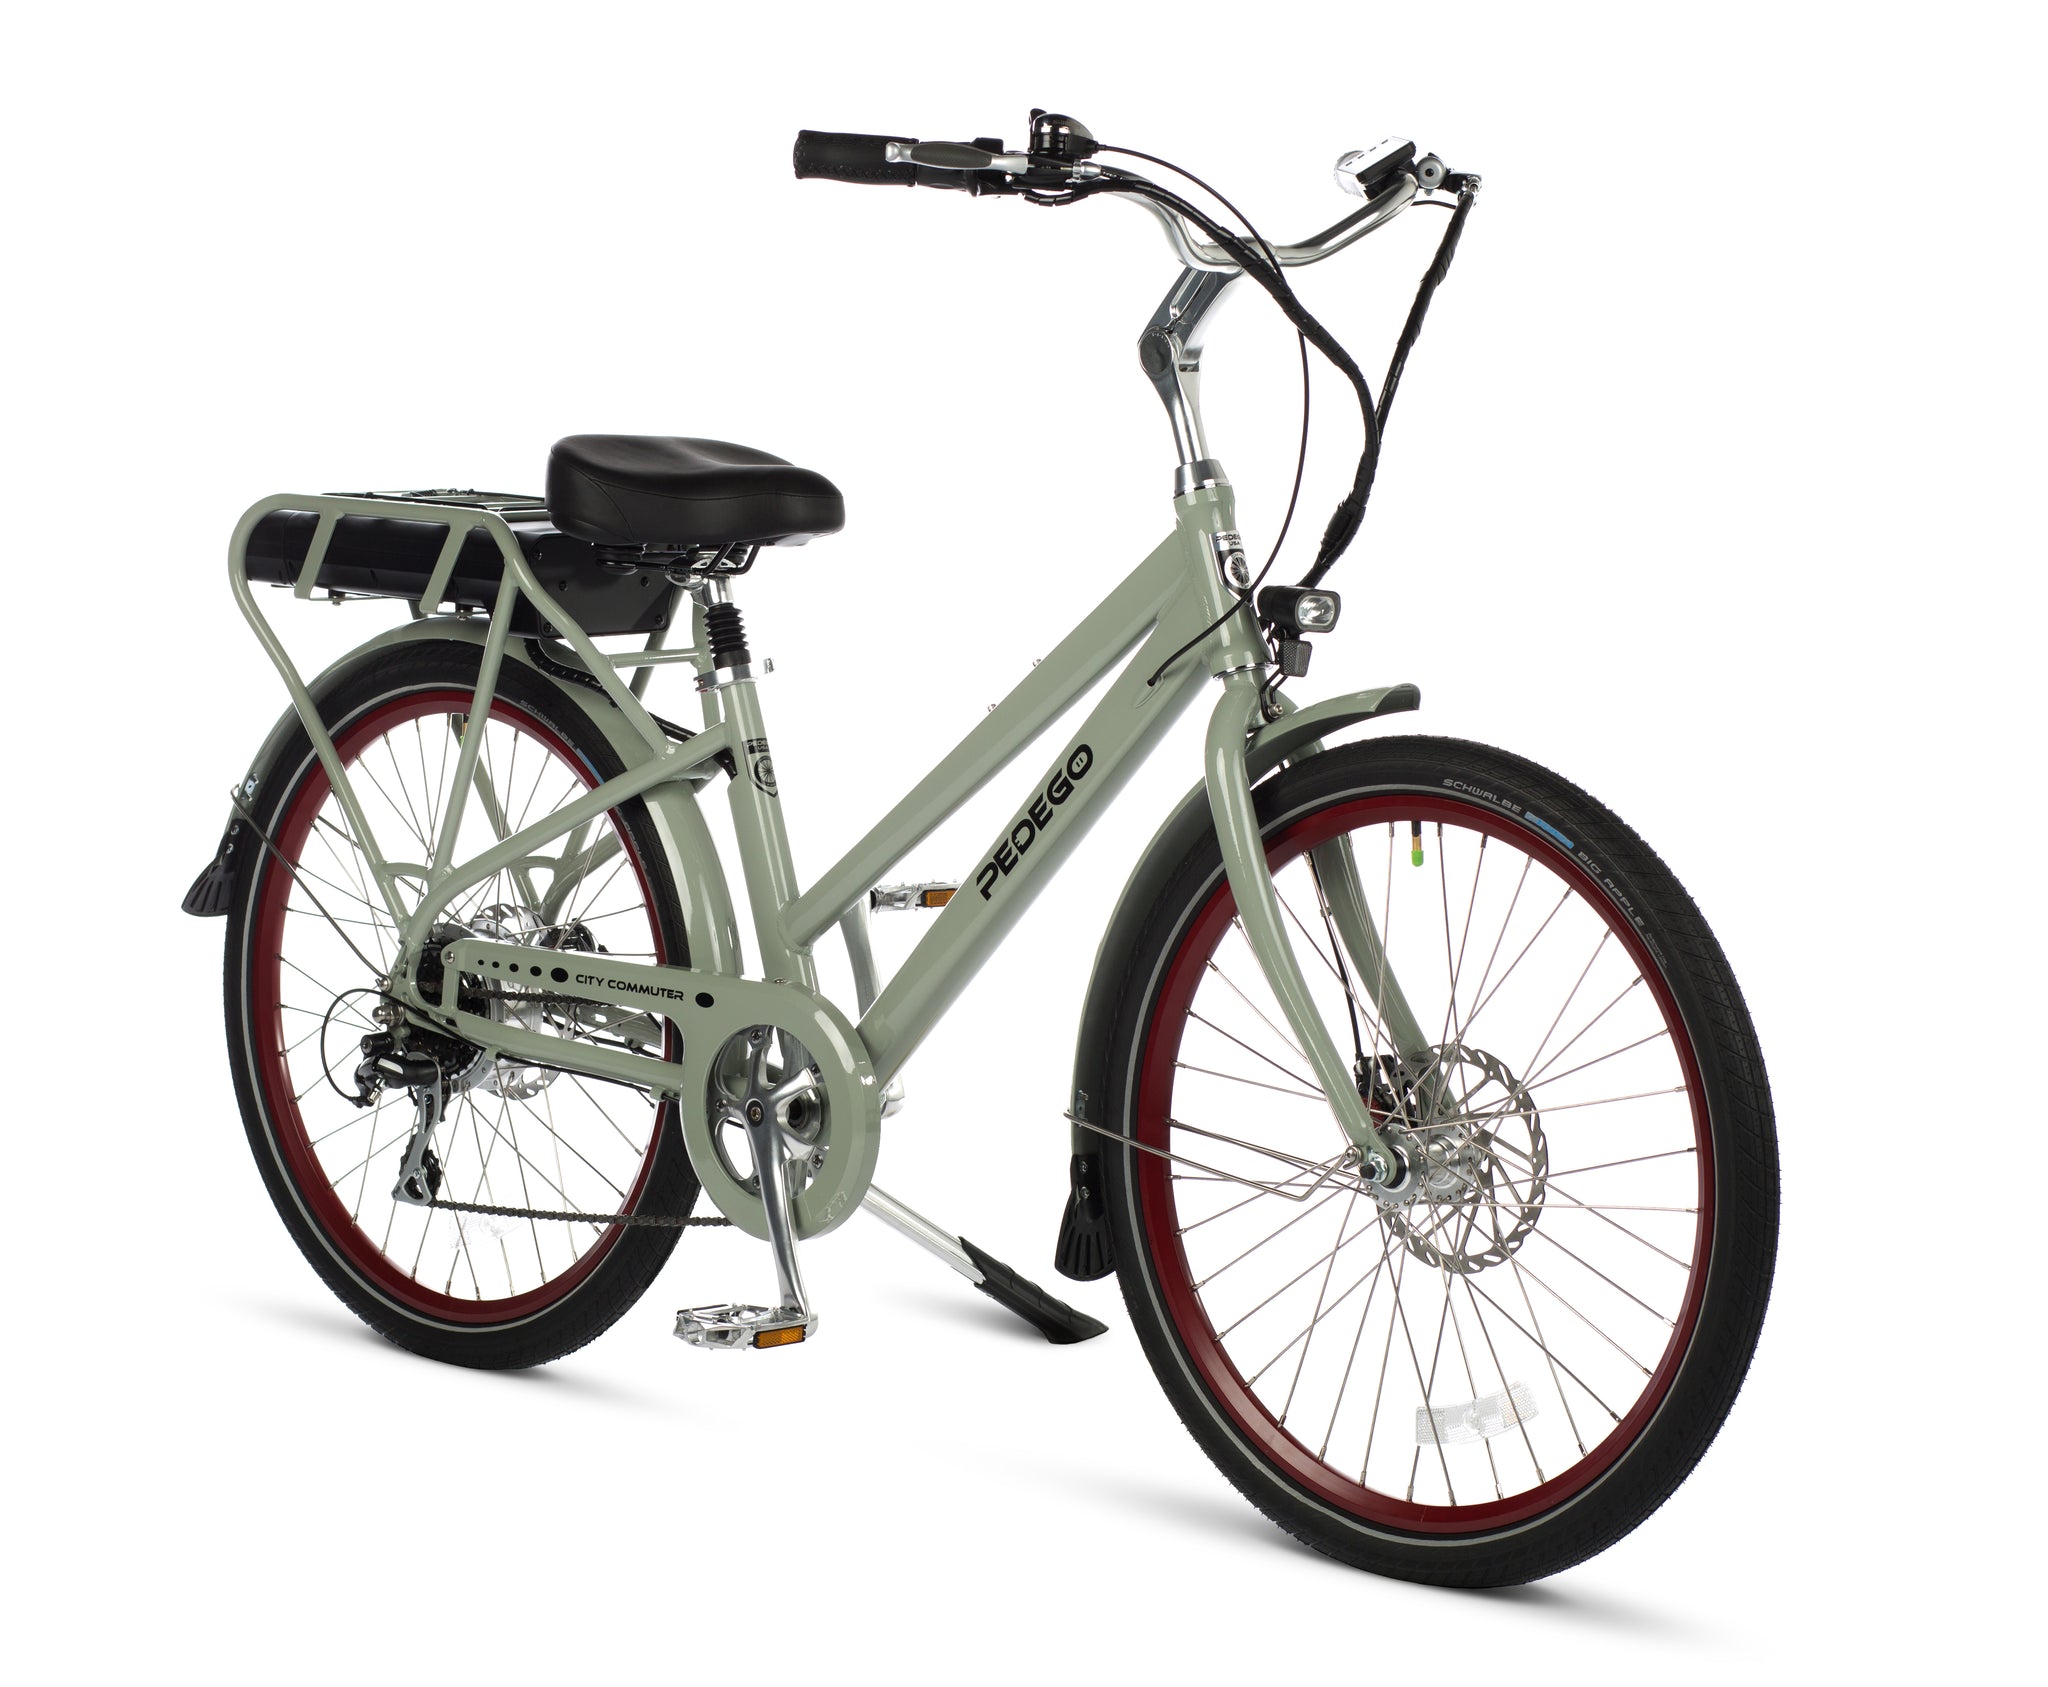 Bike Commuter Lunch Box Review: Tatay Urban Food Kit - The Bike Commuter